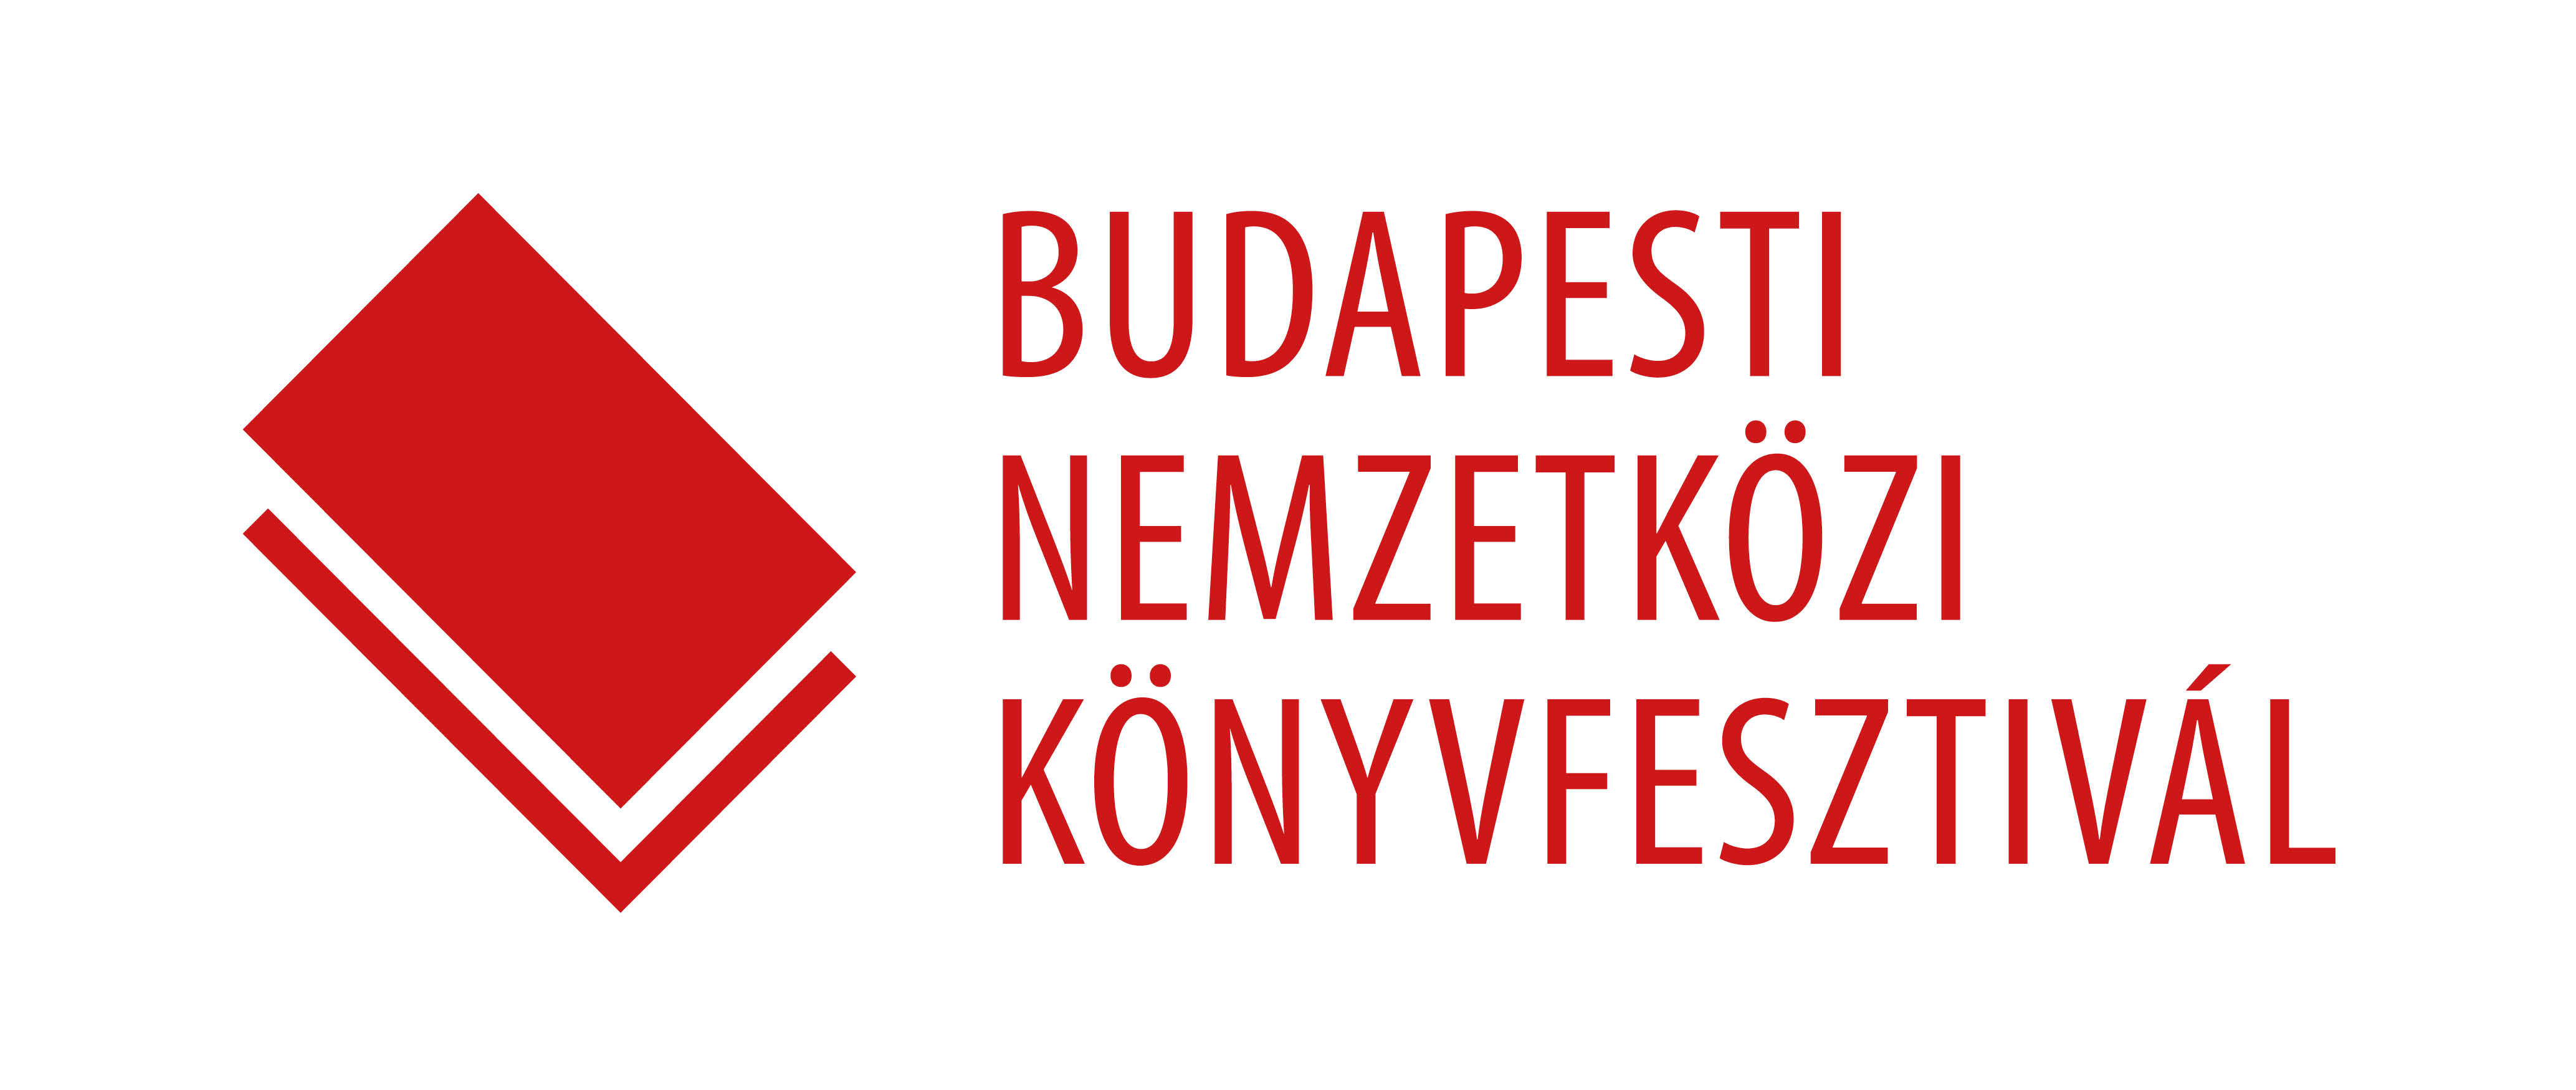 budapesti nemzetkozi konyvfesztival logo color rgb